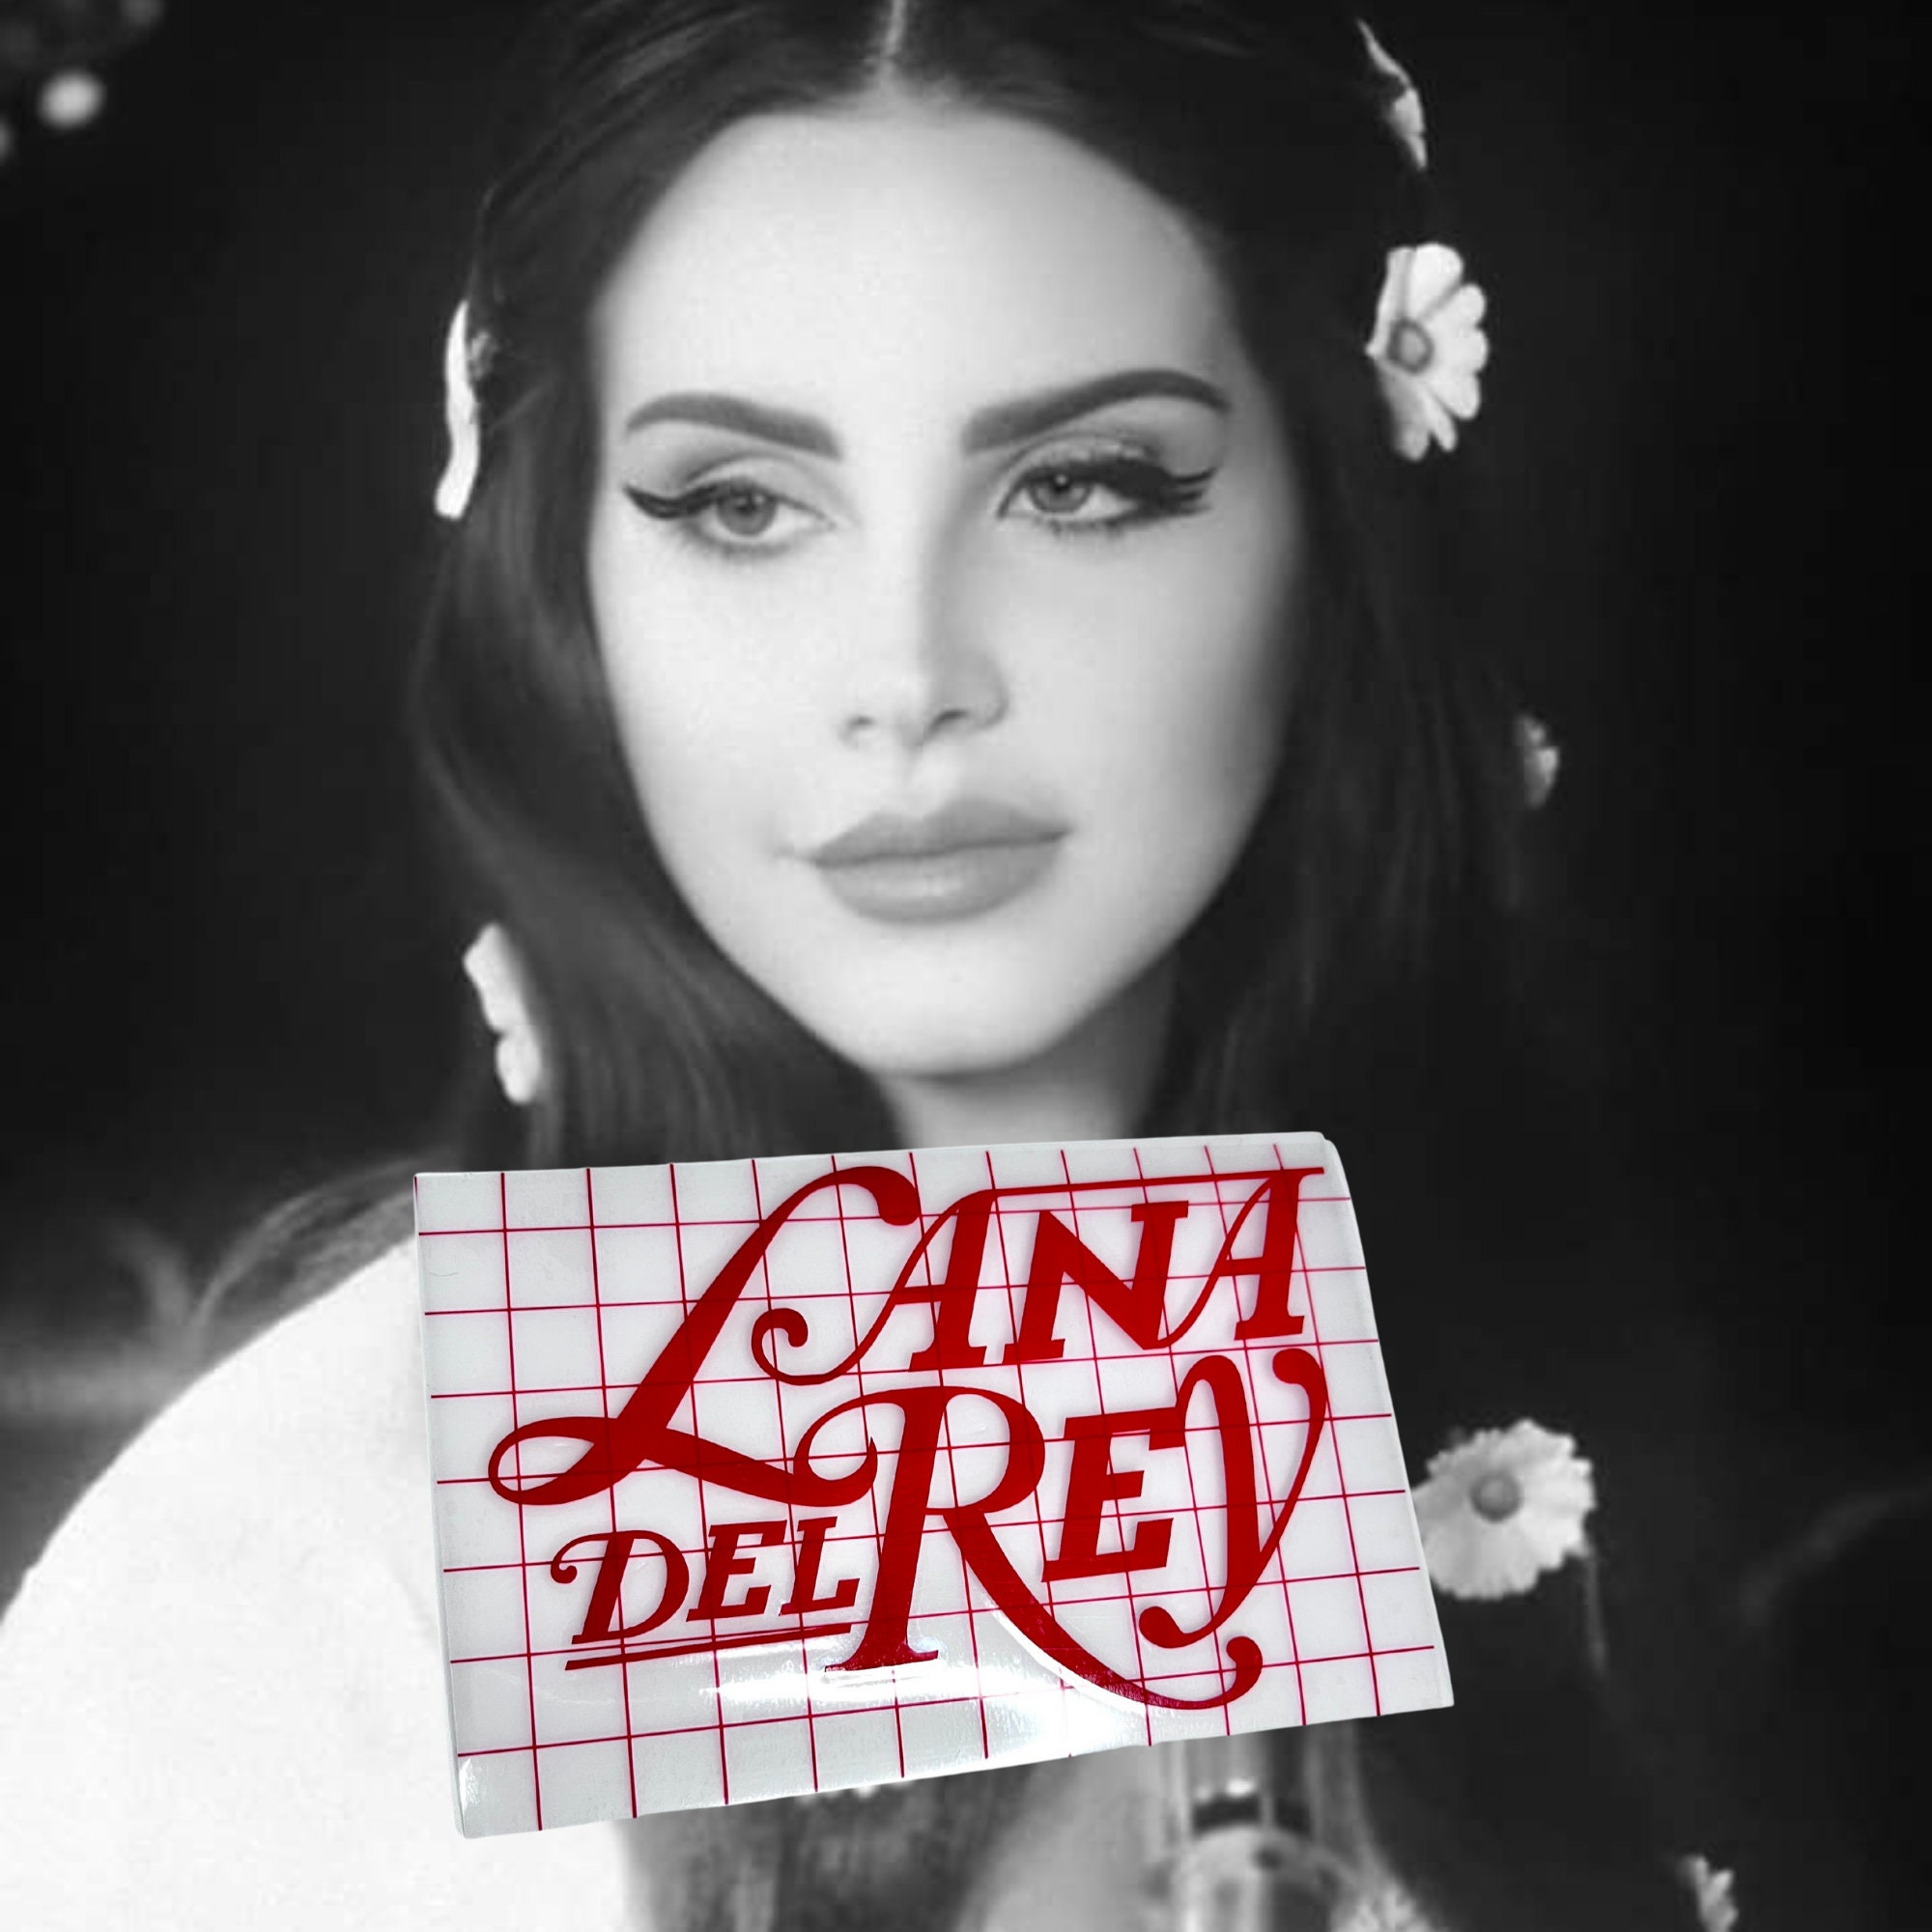 Lana Del Rey 3PACK Sticker - Sticker Graphic - Auto, Wall, Laptop, Cell,  Truck Sticker for Windows, Cars, Trucks : : Automotive